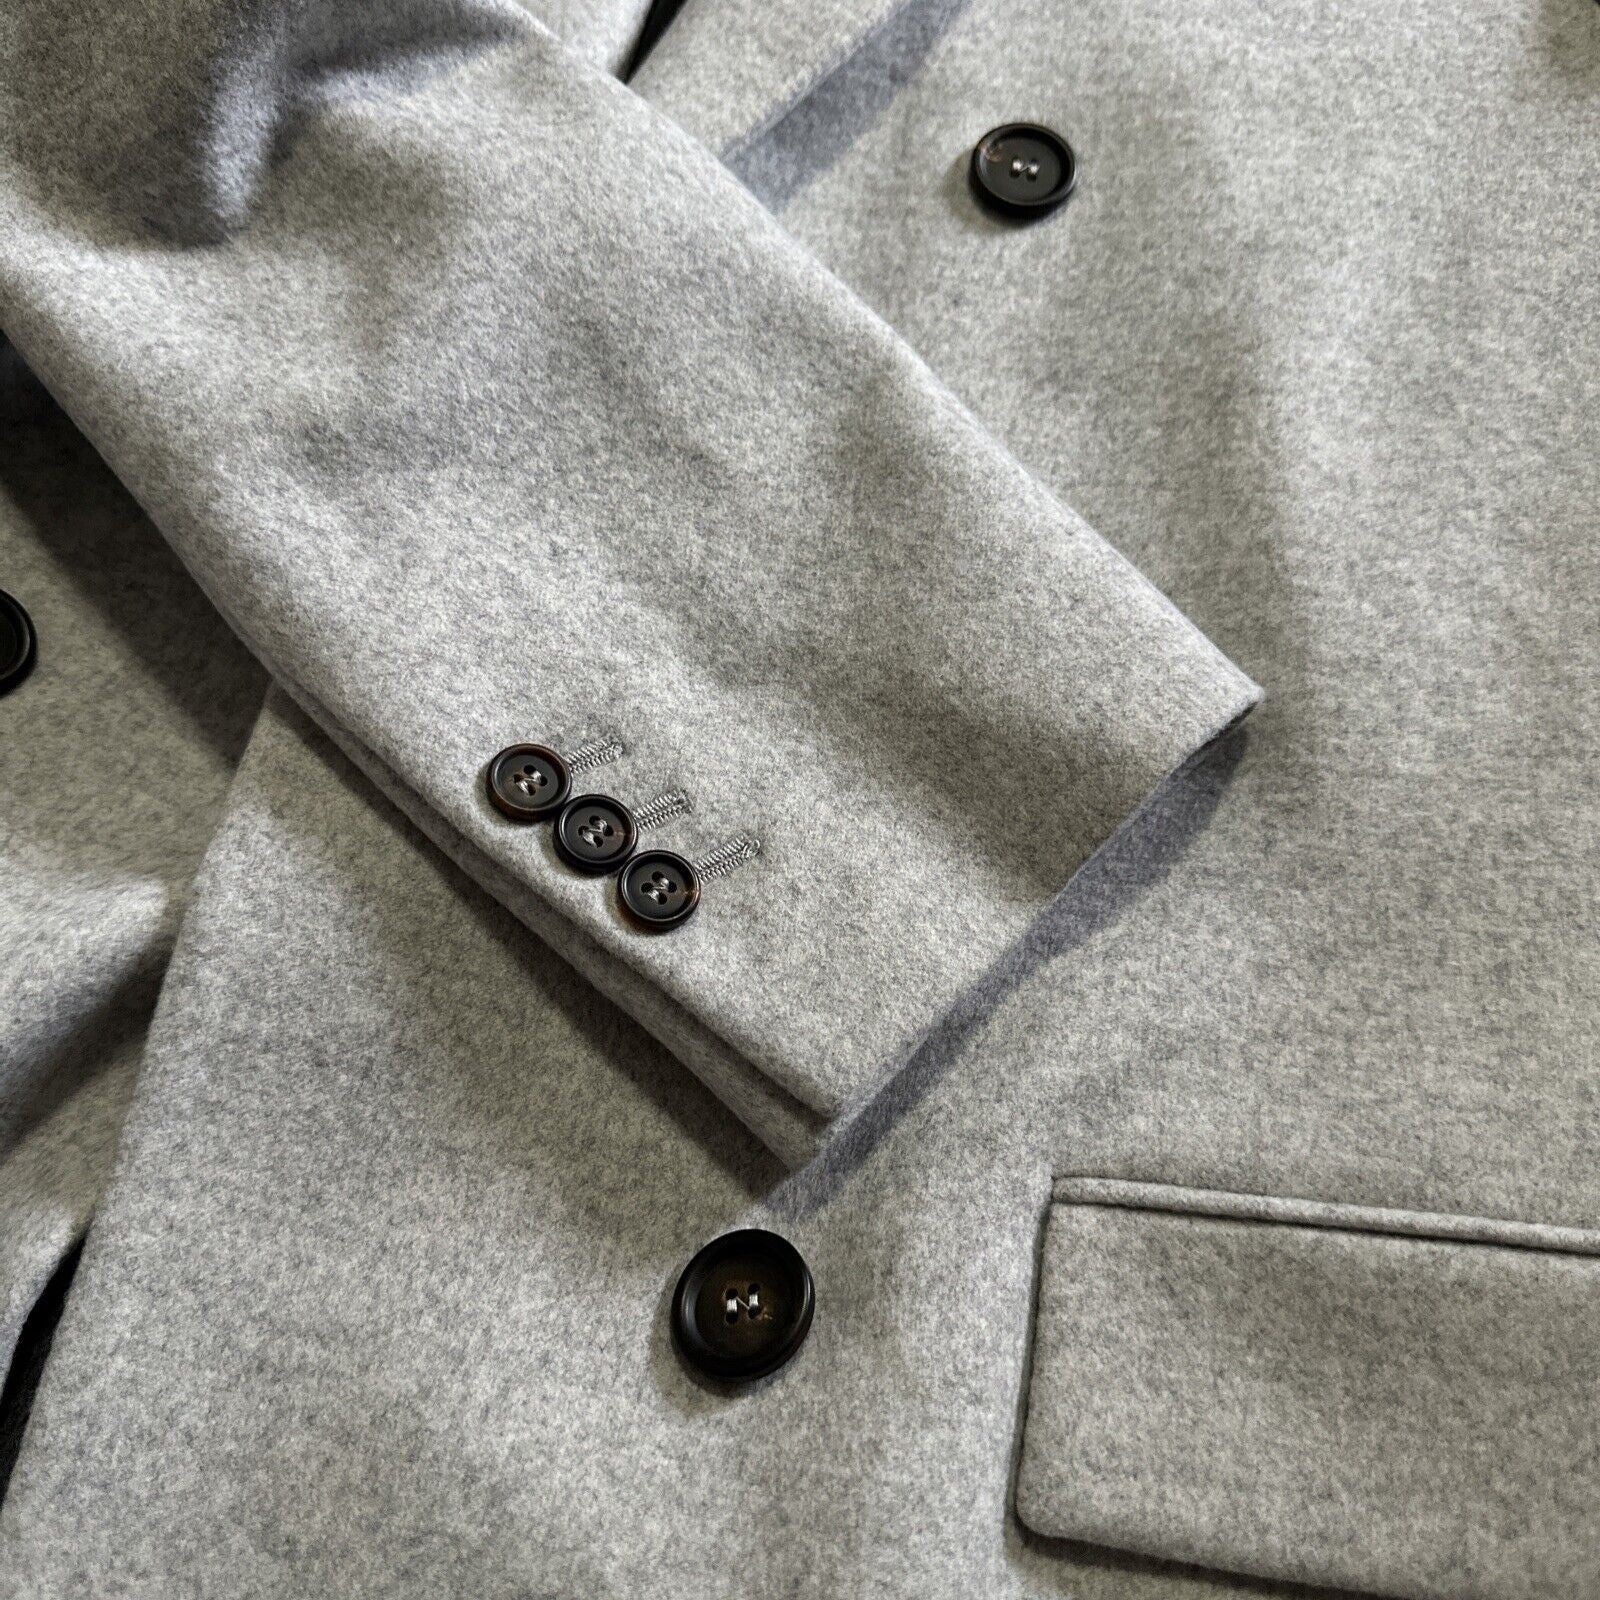 New $7495 Brunello Cucinelli Water Resistant Wool Blend Coat Pebbl Gray 40/4